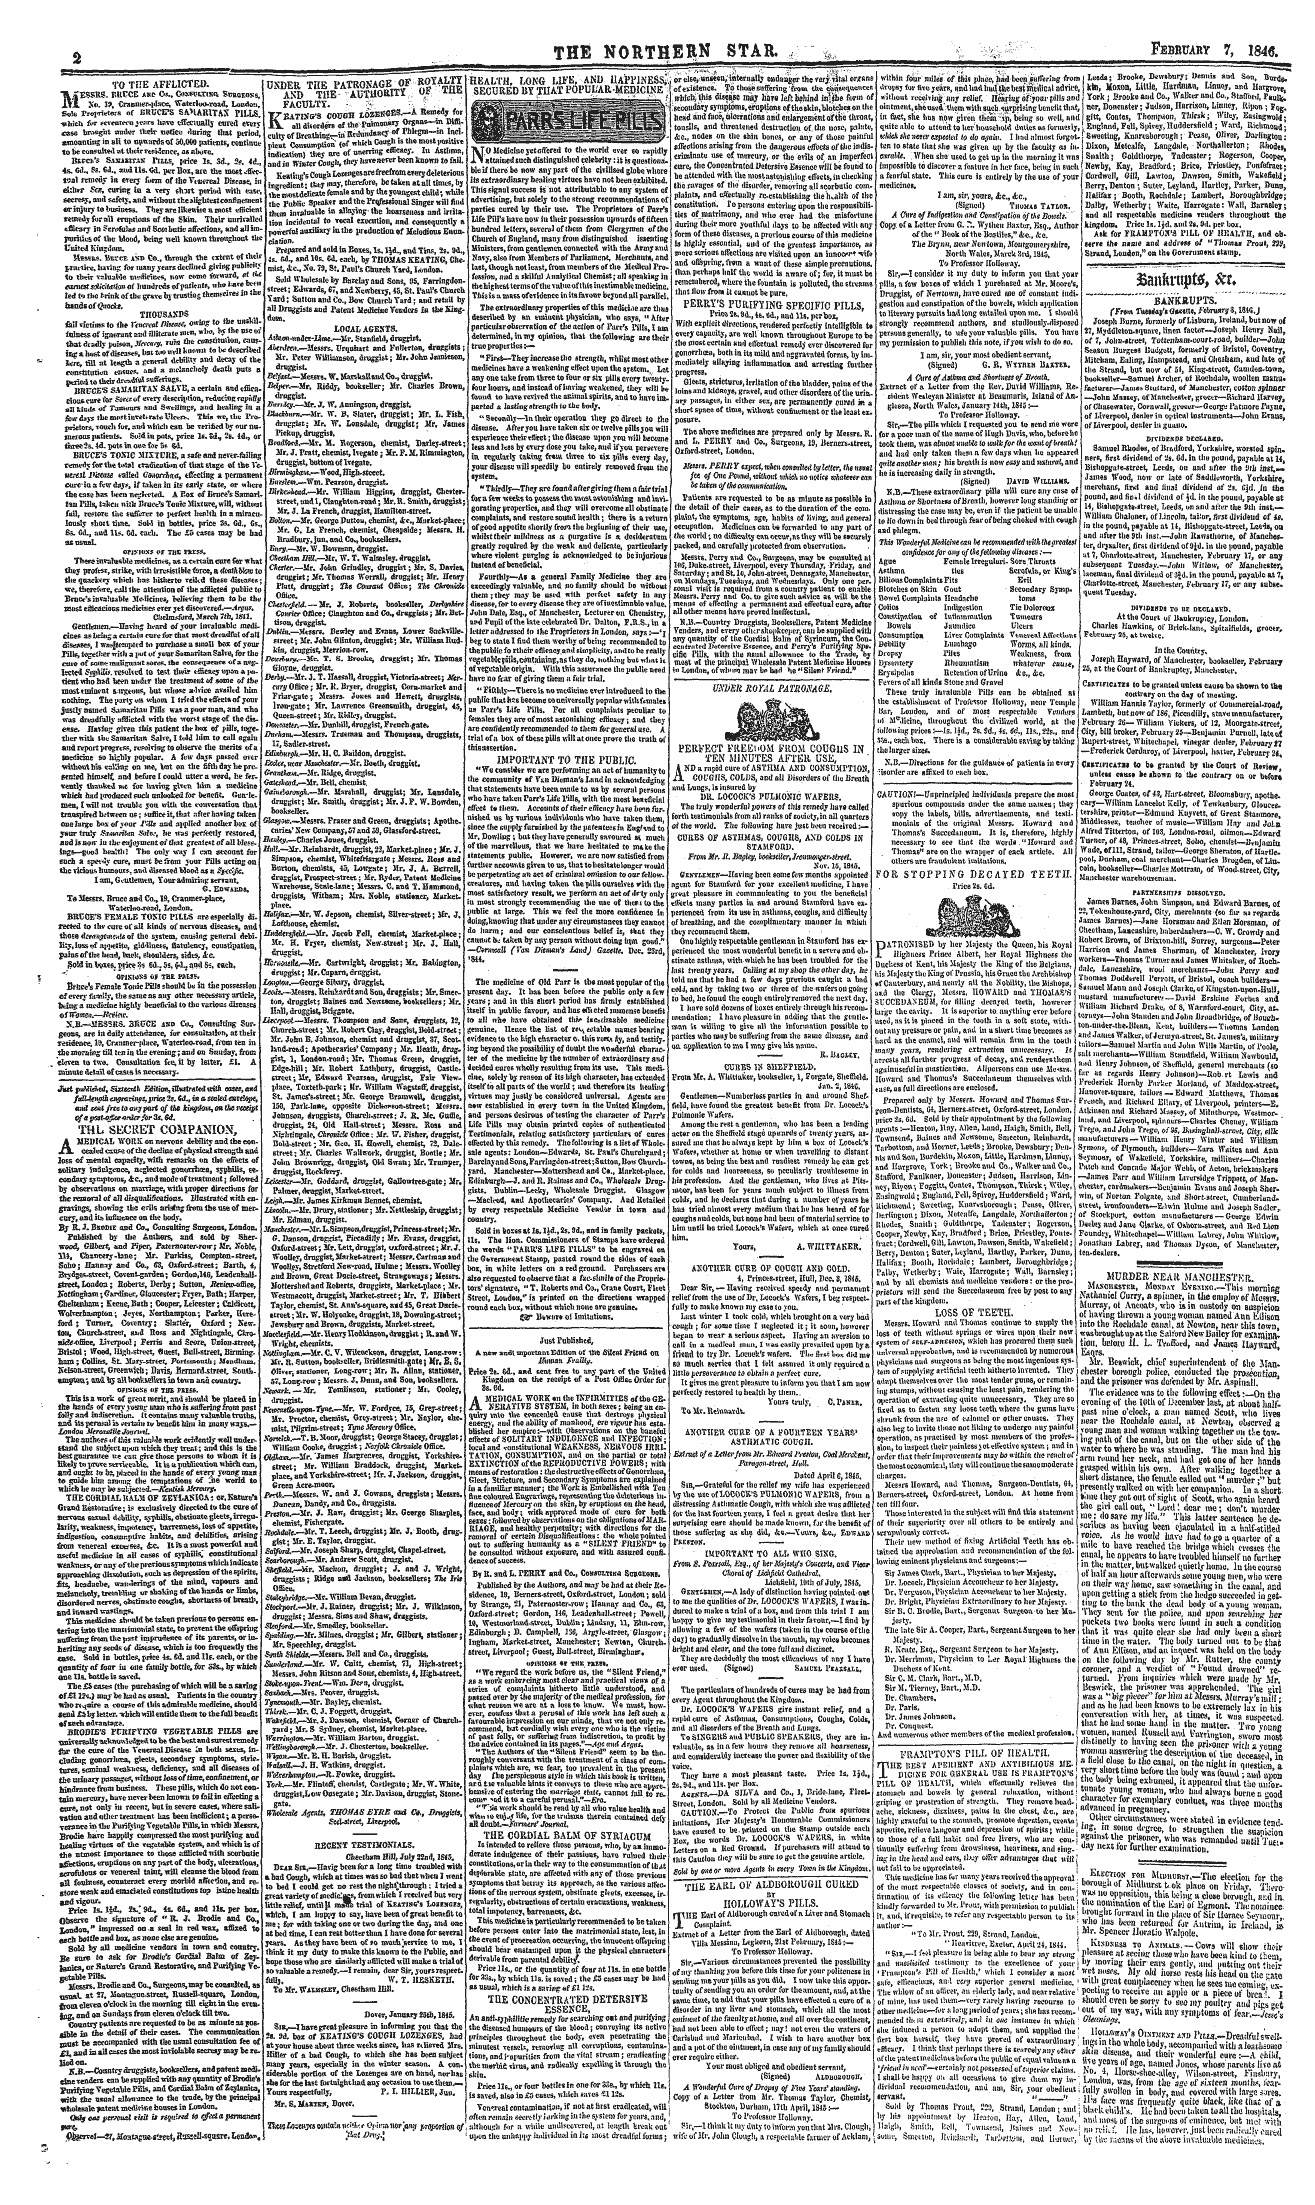 Northern Star (1837-1852): jS F Y, 2nd edition - Santapttf, #£?